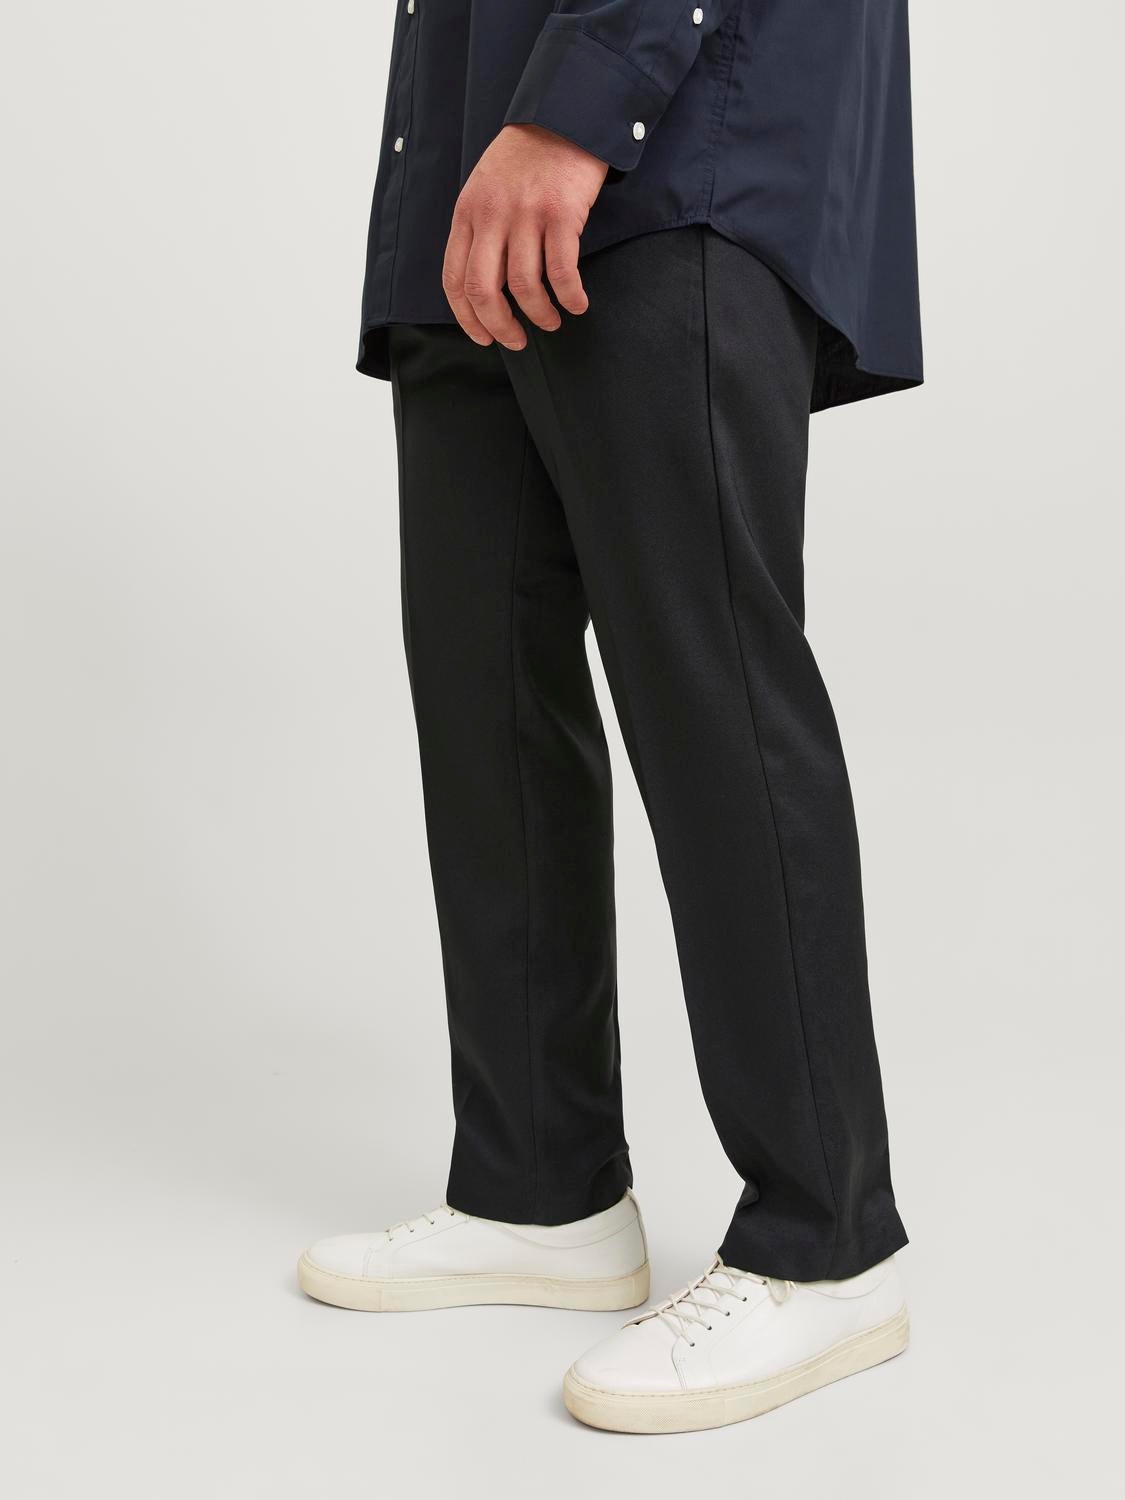 Jack & Jones Plus Size Slim Fit Chino trousers -Black - 12252525